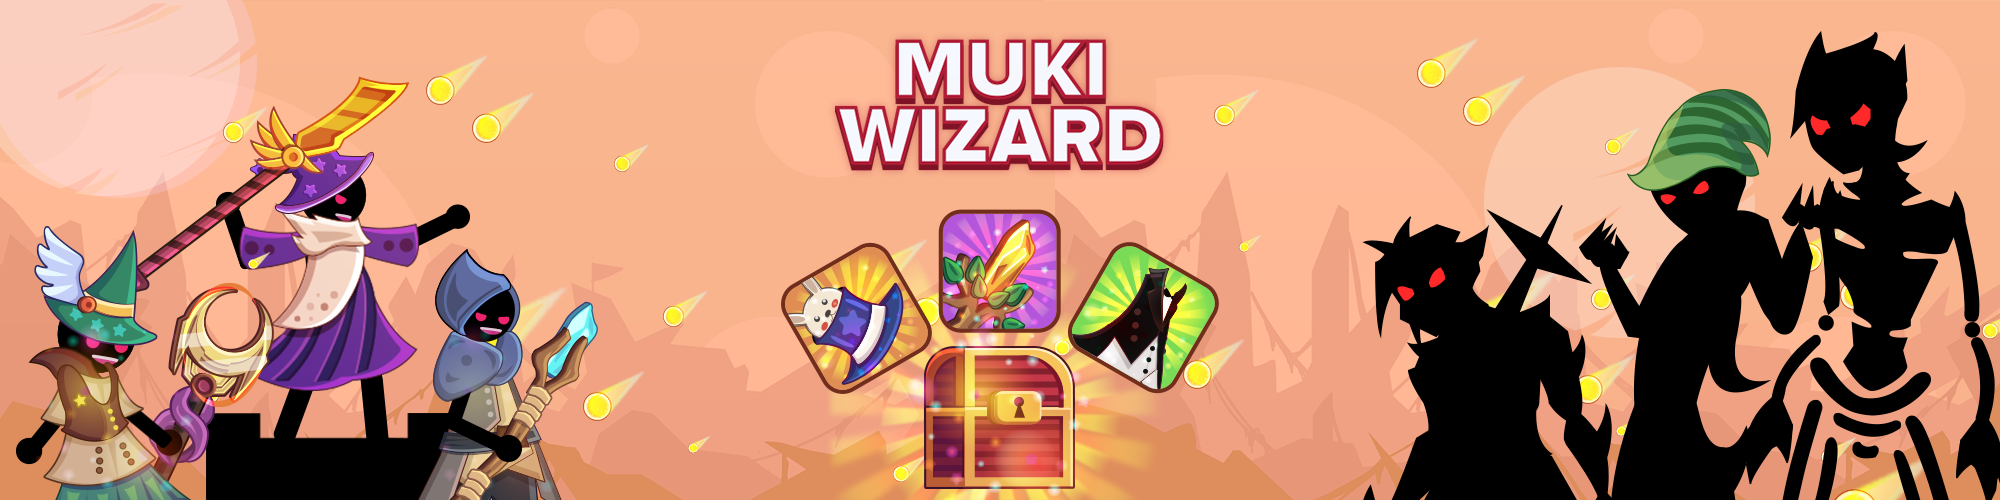 Muki Wizard